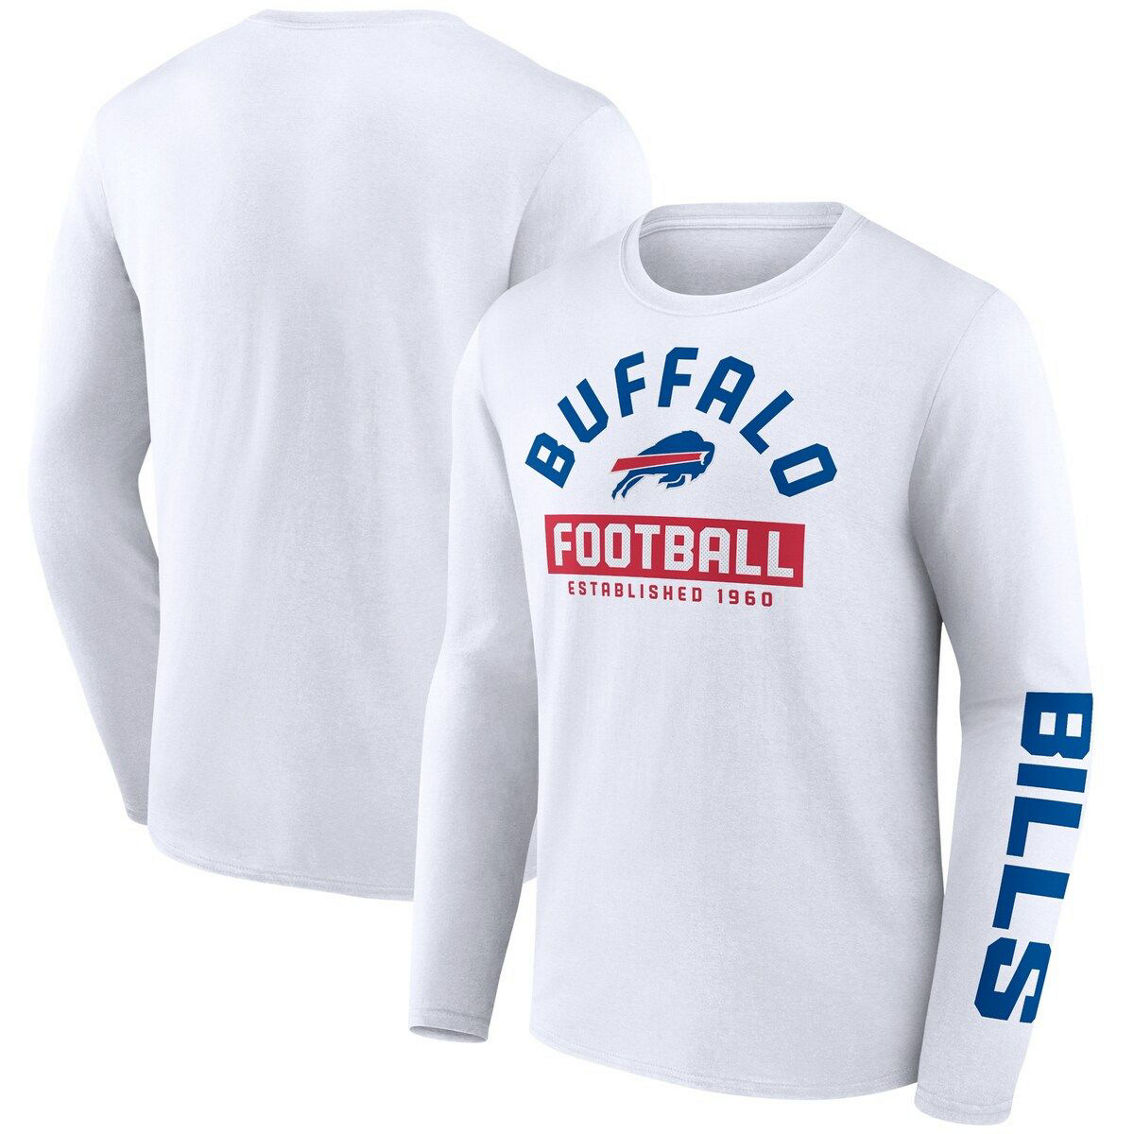 Fanatics Branded Men's White Buffalo Bills Long Sleeve T-Shirt